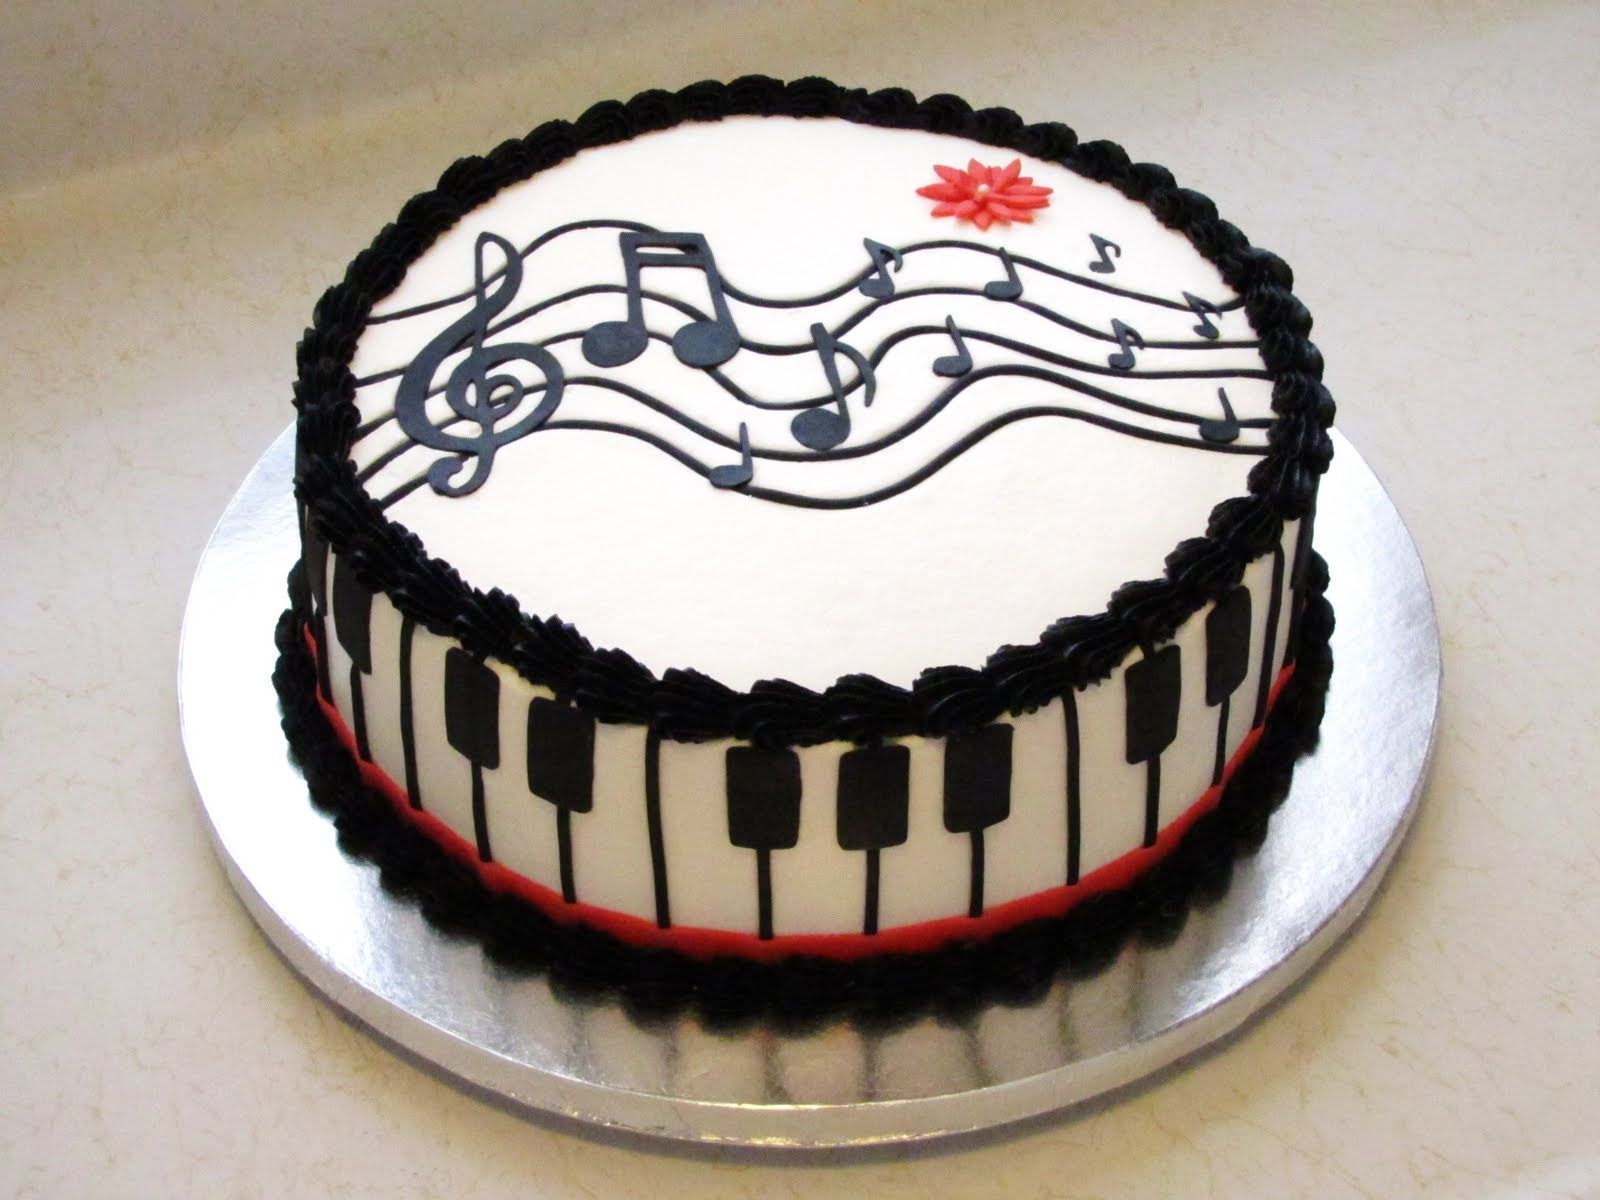 9+ of the Best Homemade Birthday Cake Ideas -   14 cake Birthday music ideas